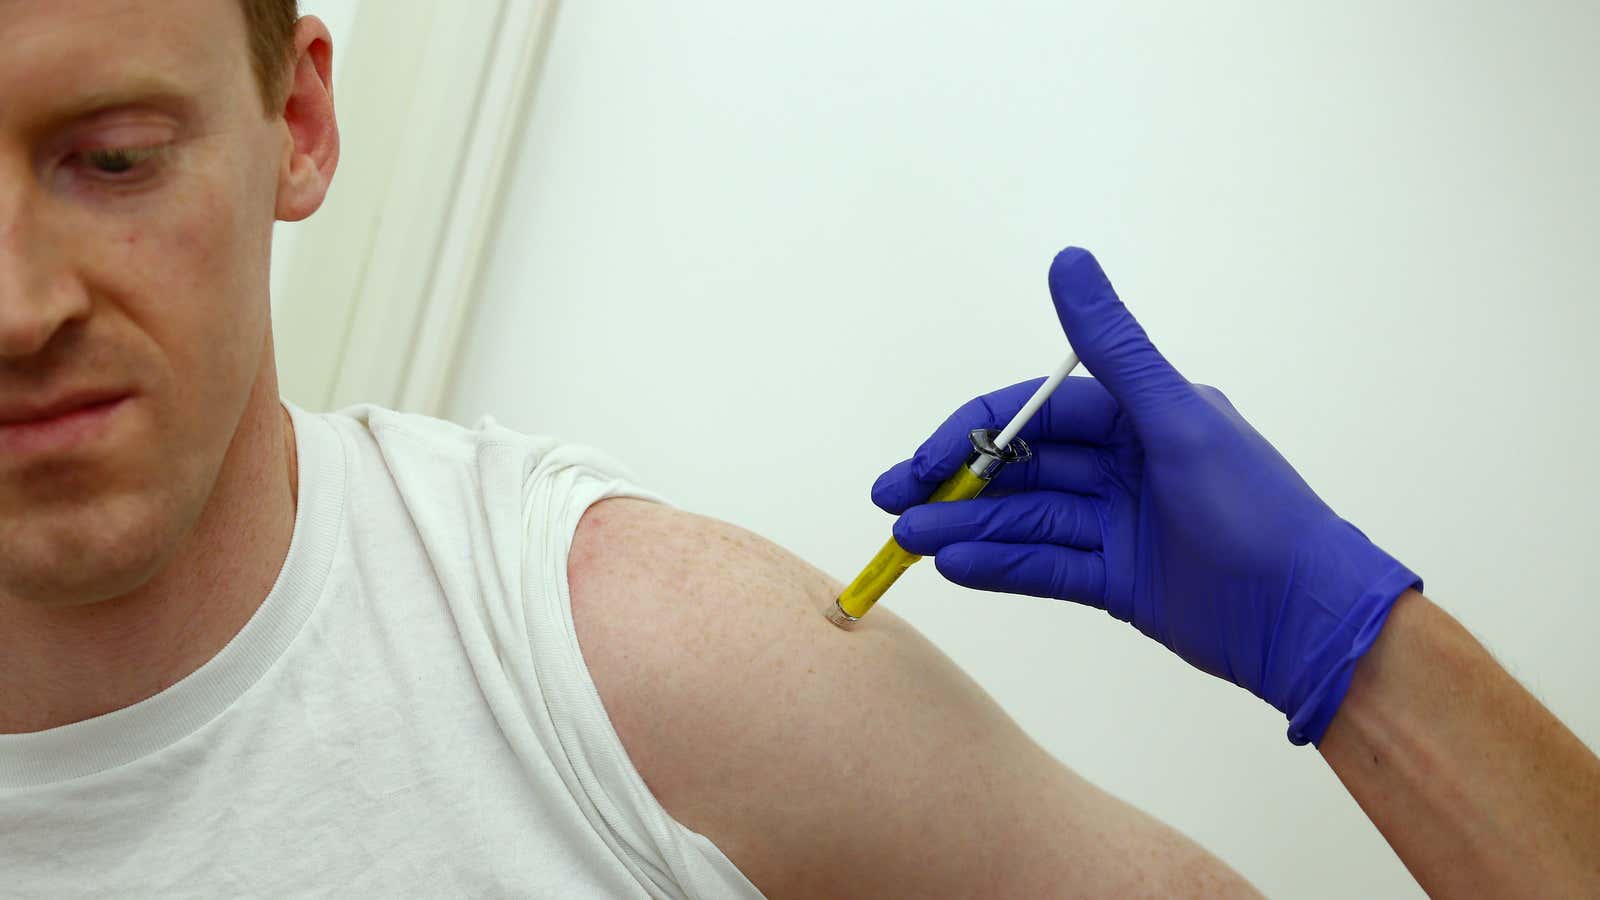 Speeding up coronavirus vaccine trials creates risk. But the longer we wait, the more people die.